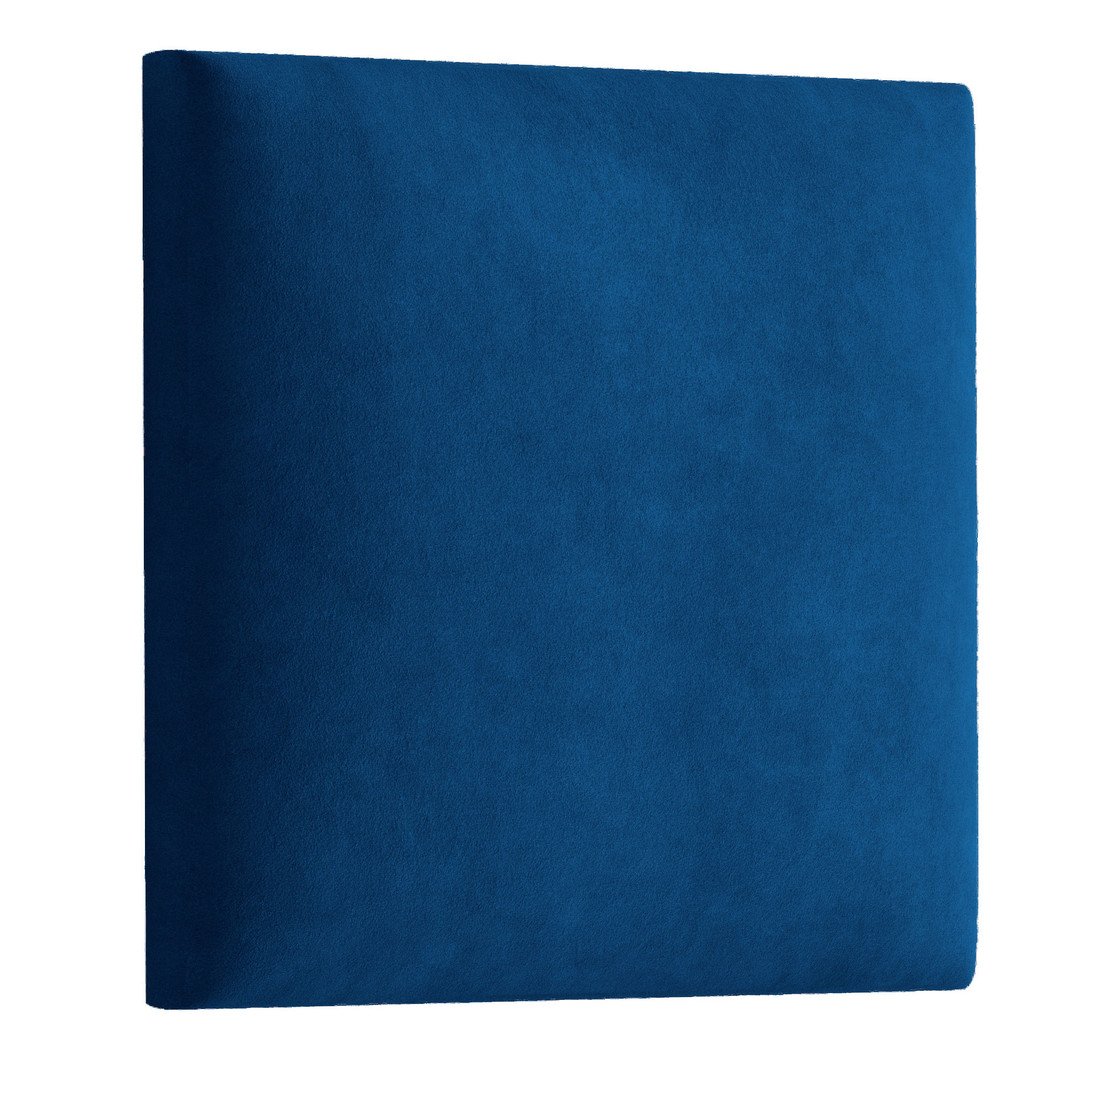 Eka Čalouněný panel Trinity 40 x 40 cm - Tmavá modrá 2331